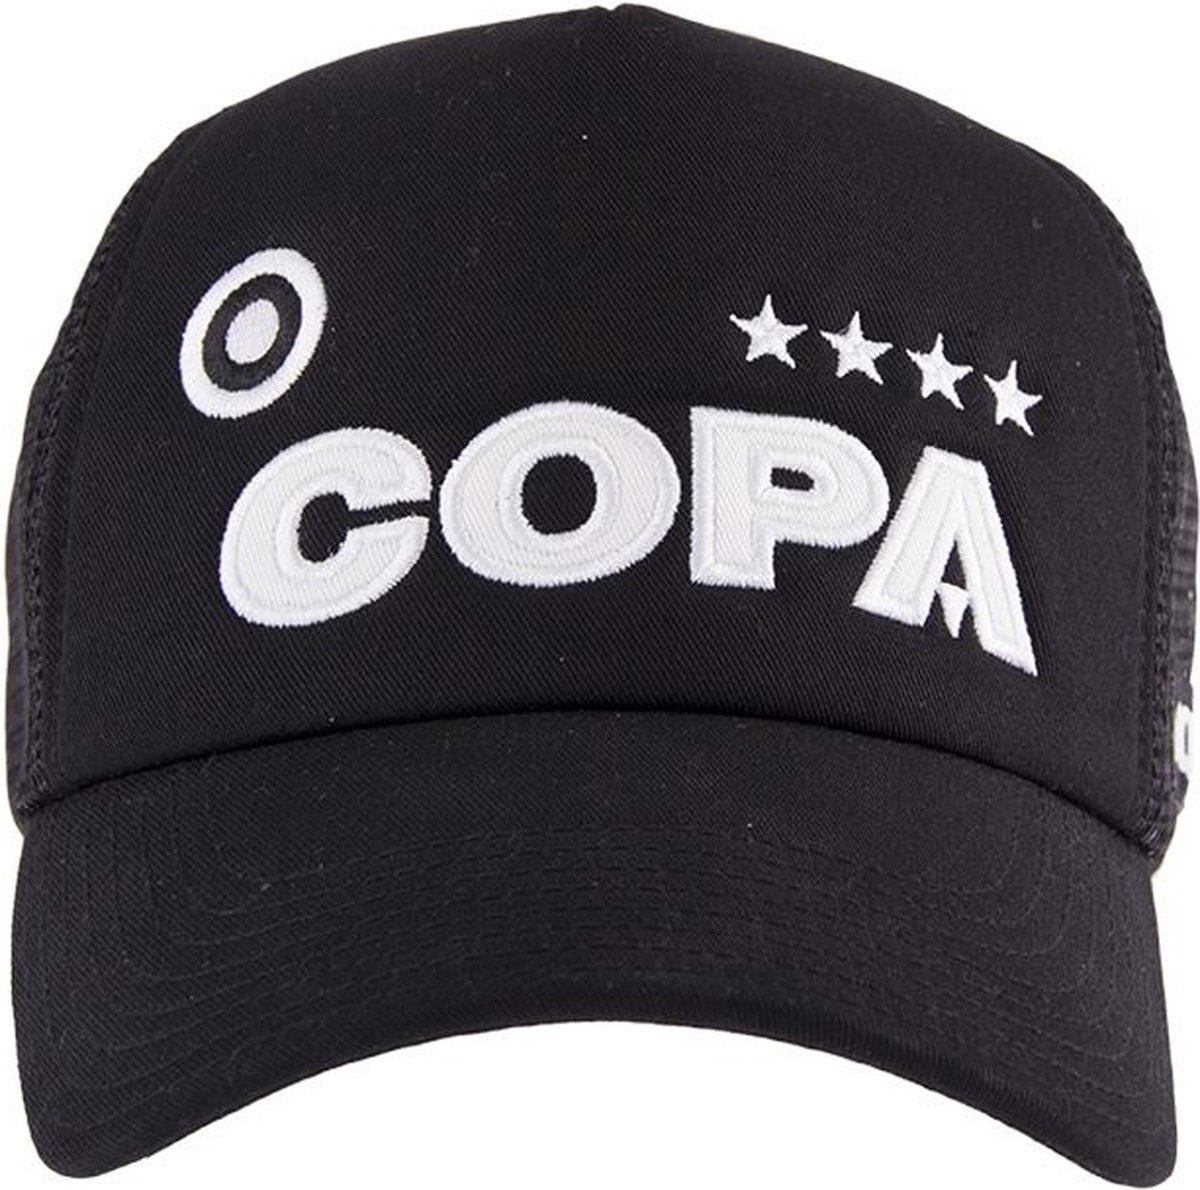 COPA - COPA Campioni Black Trucker Cap - One size - Zwart